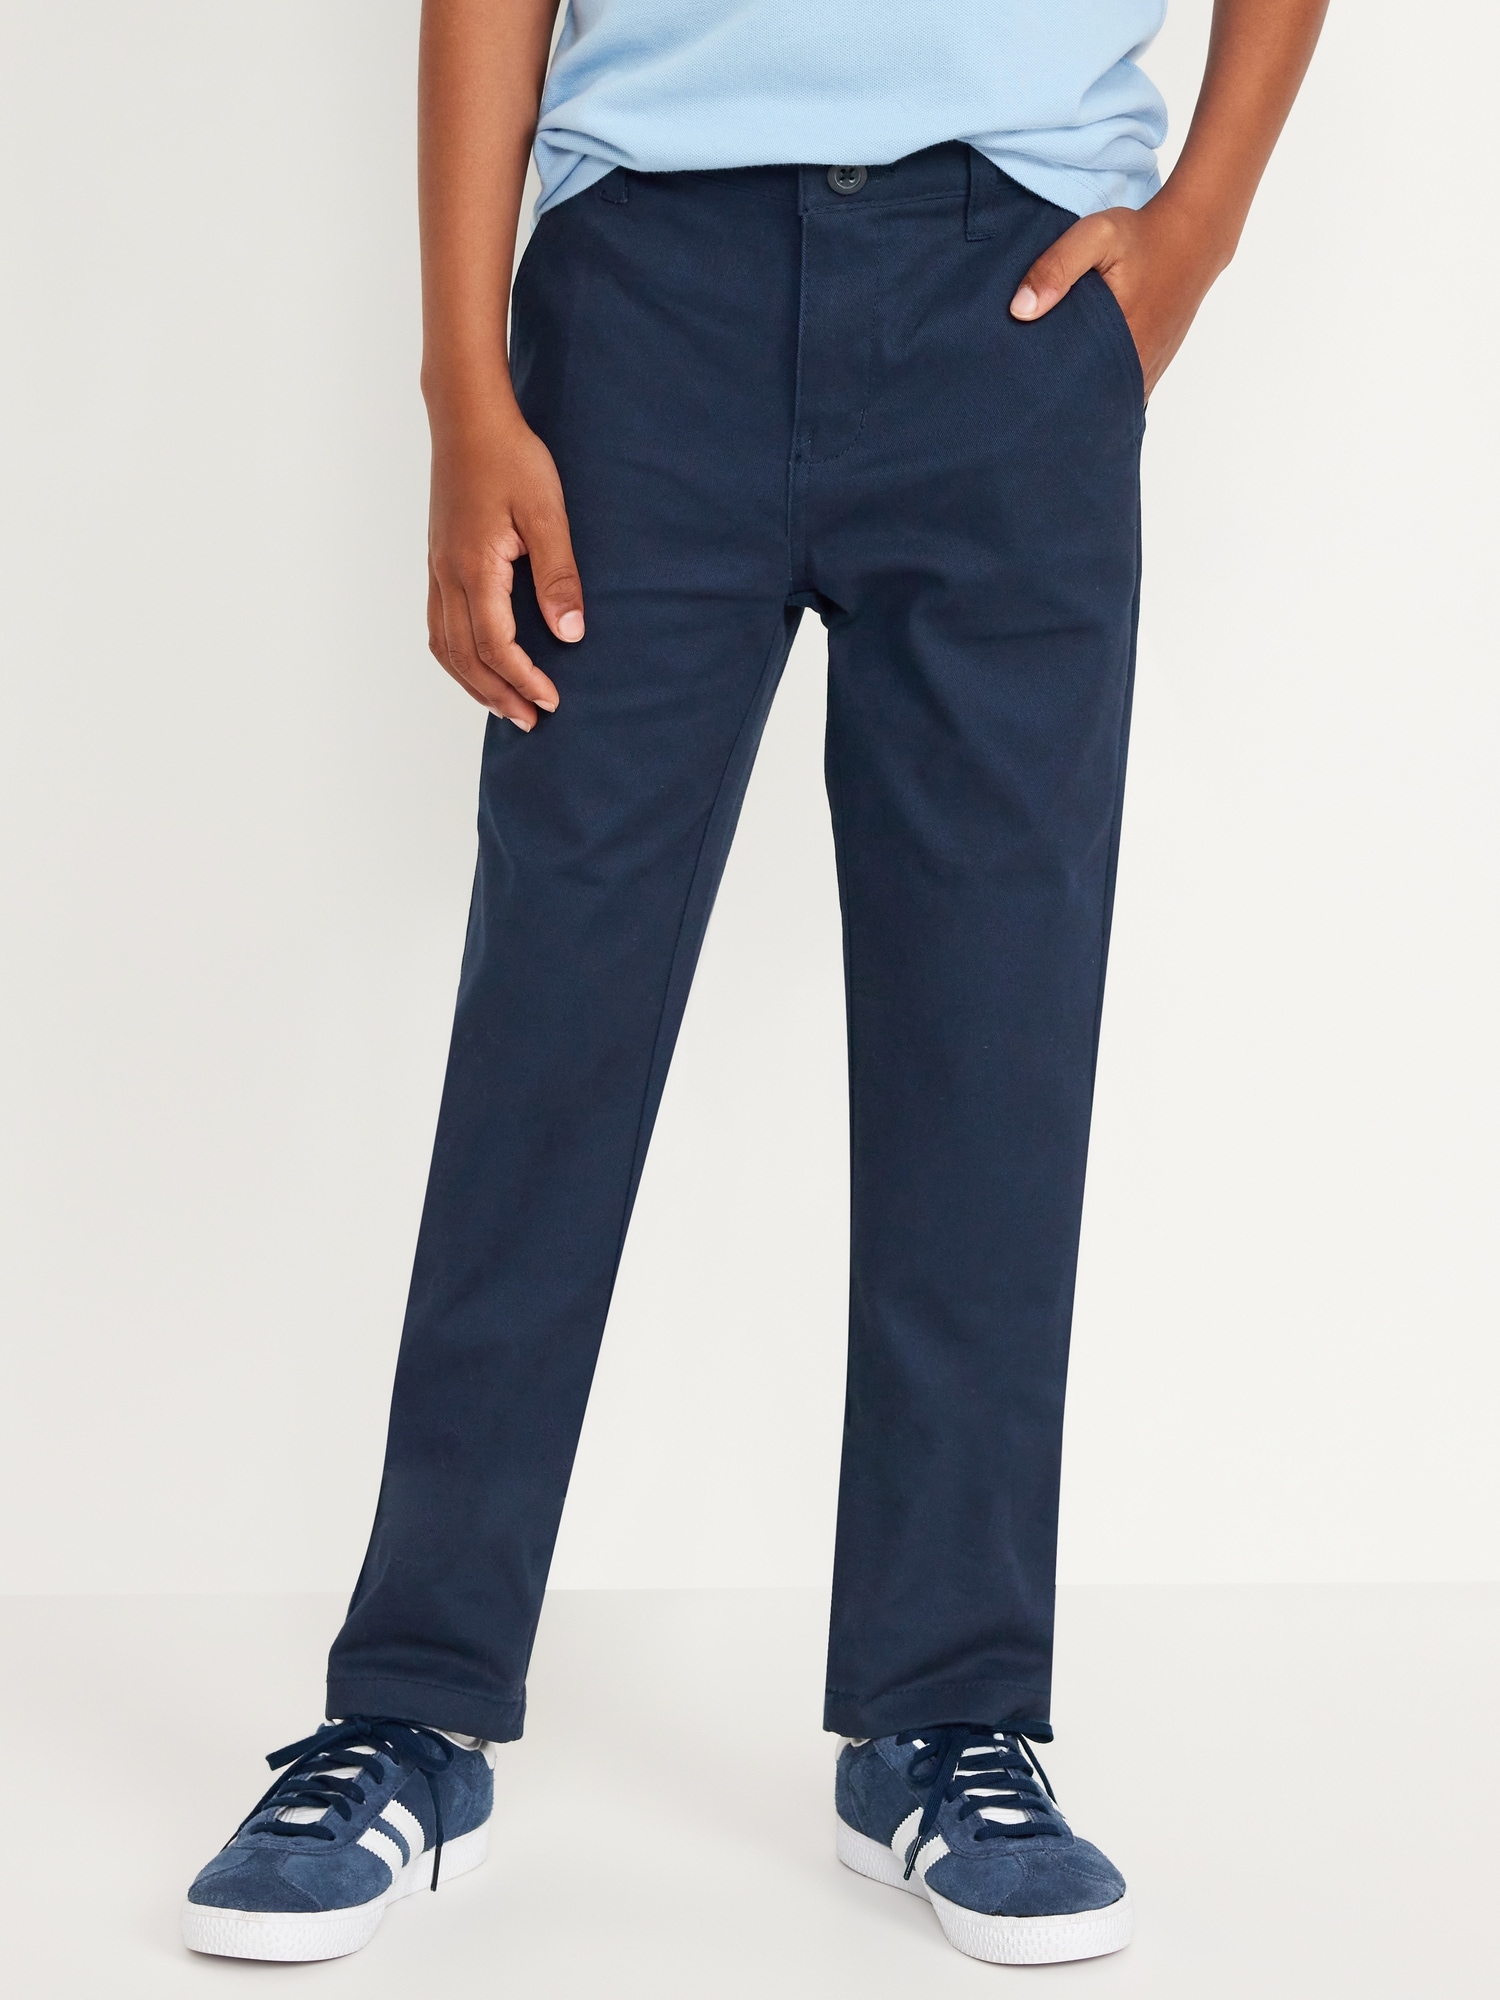 Slim School Uniform Chino Pants for Boys Hot Deal